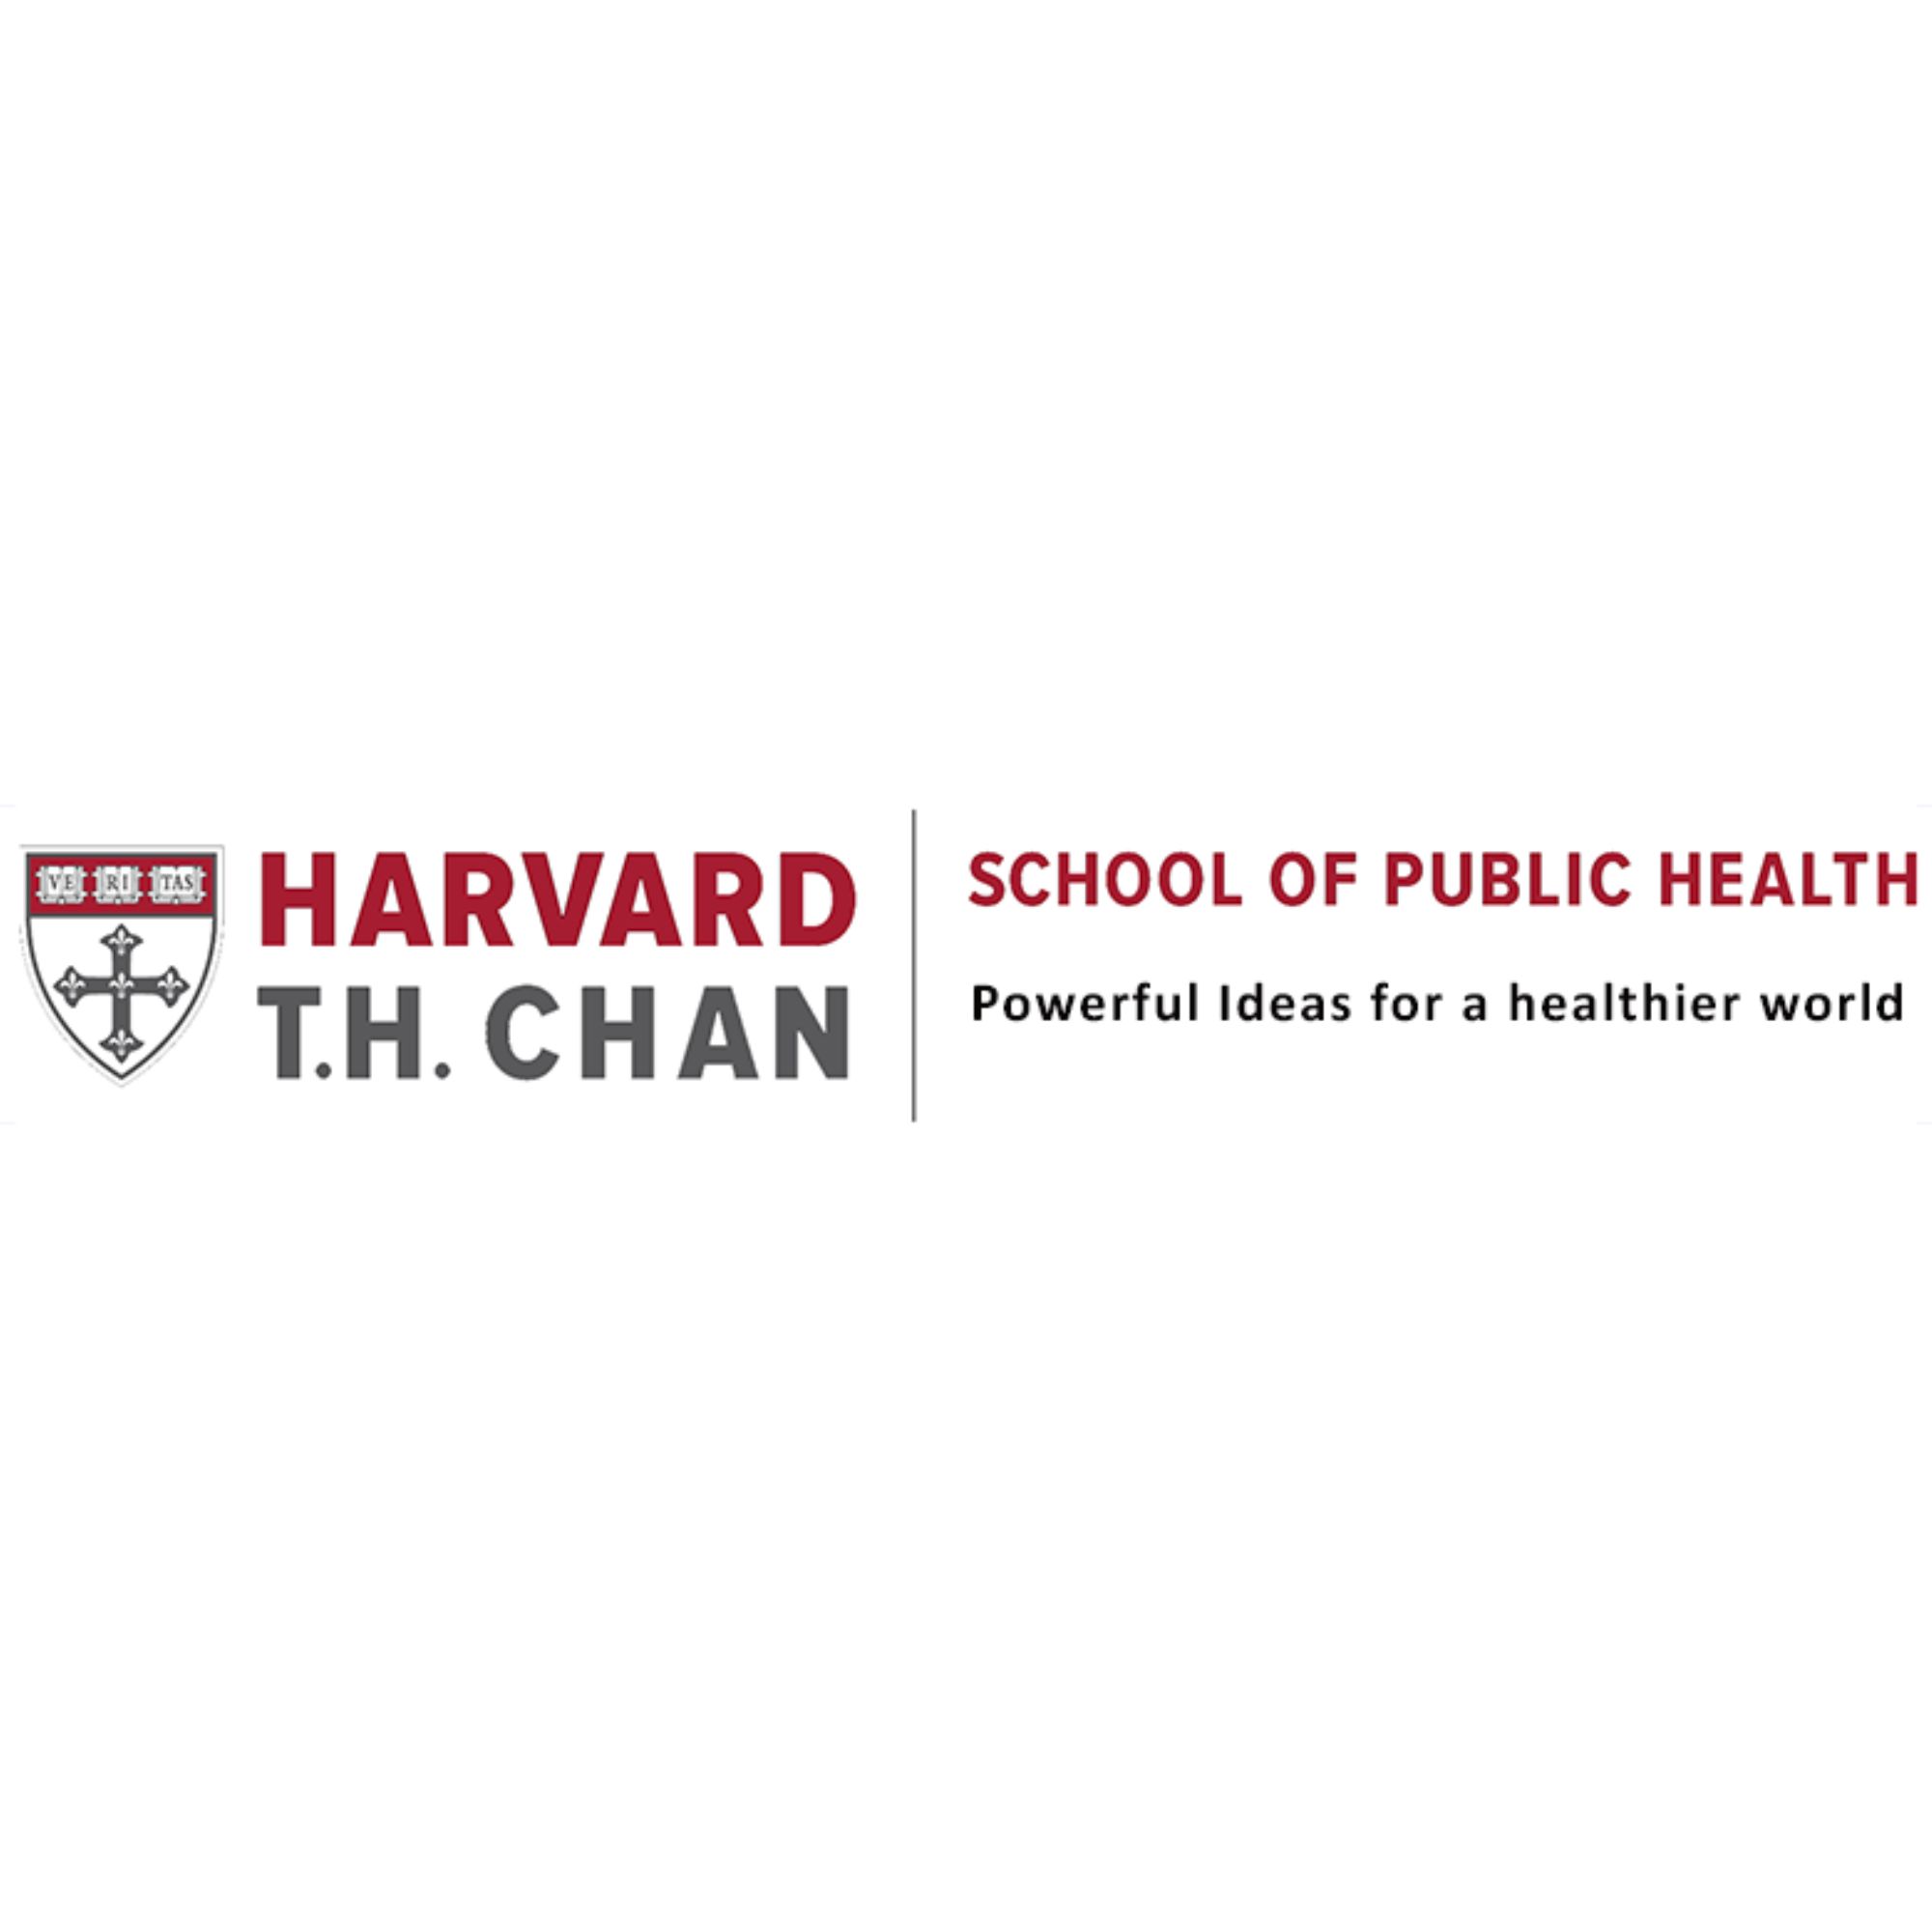 HARVARD T.H. CHAN SCHOOL OF PUBLIC HEALTH